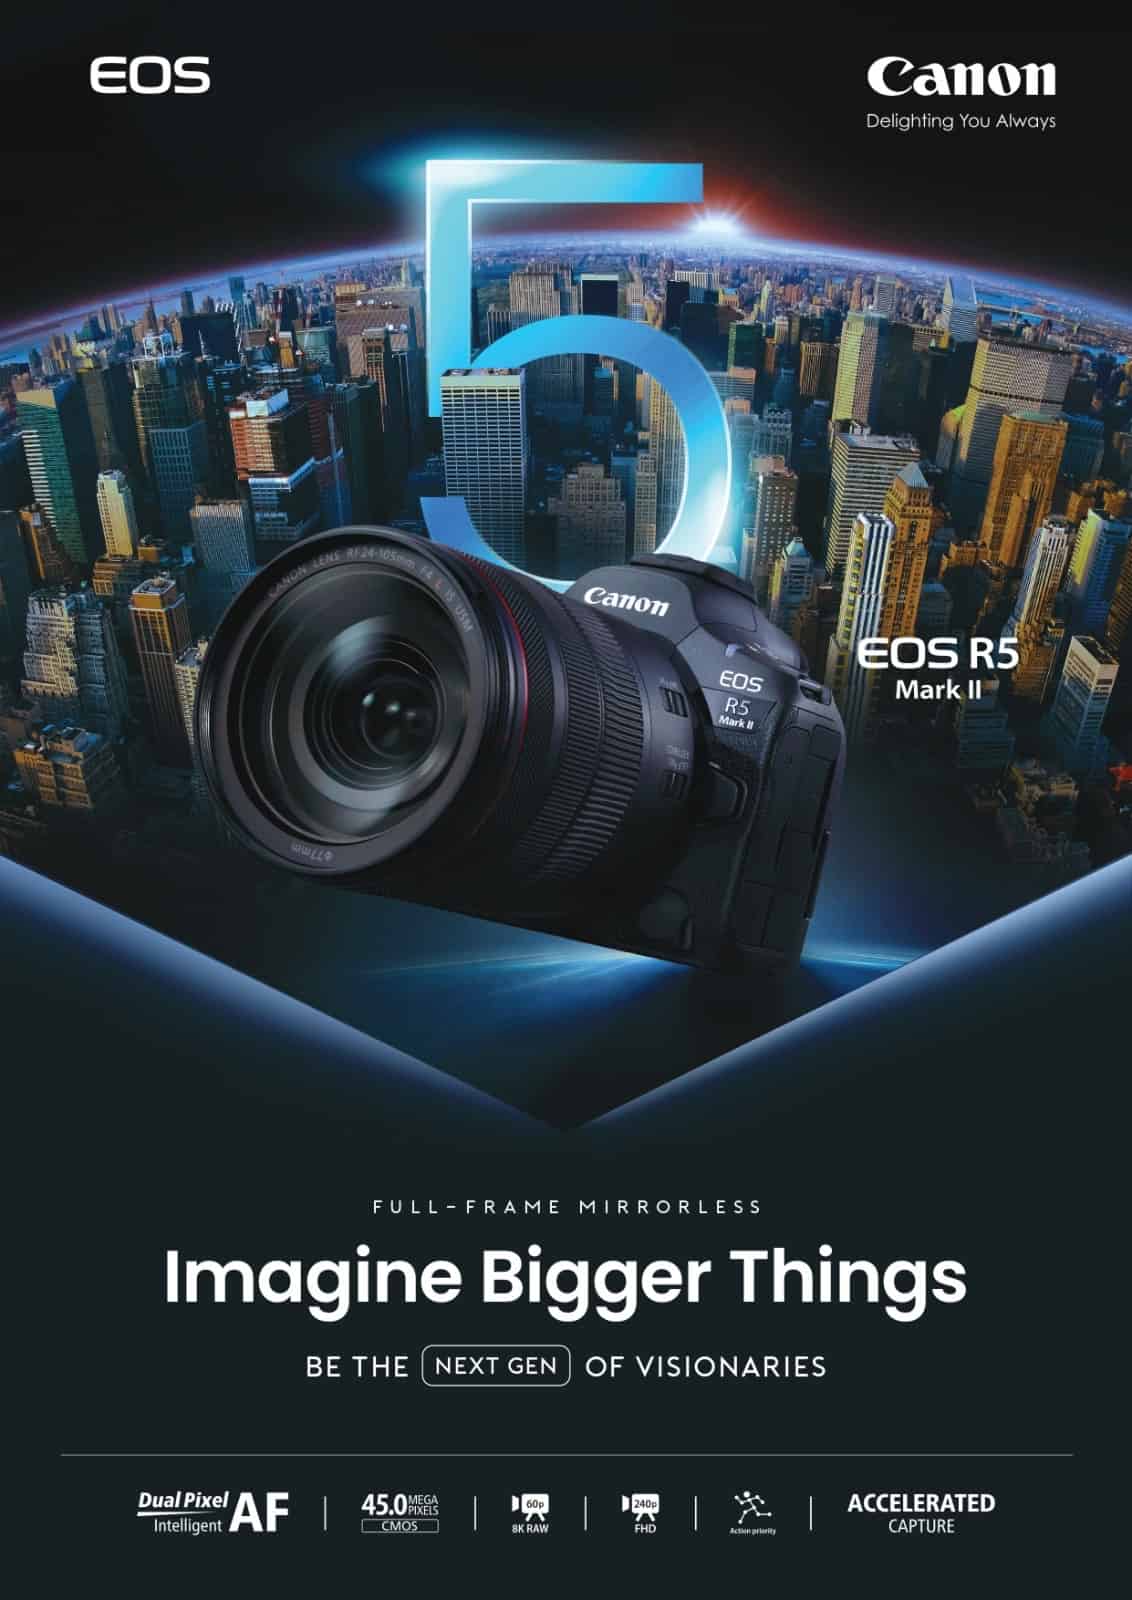 EOS R5 Mark II: Imagine Bigger Things